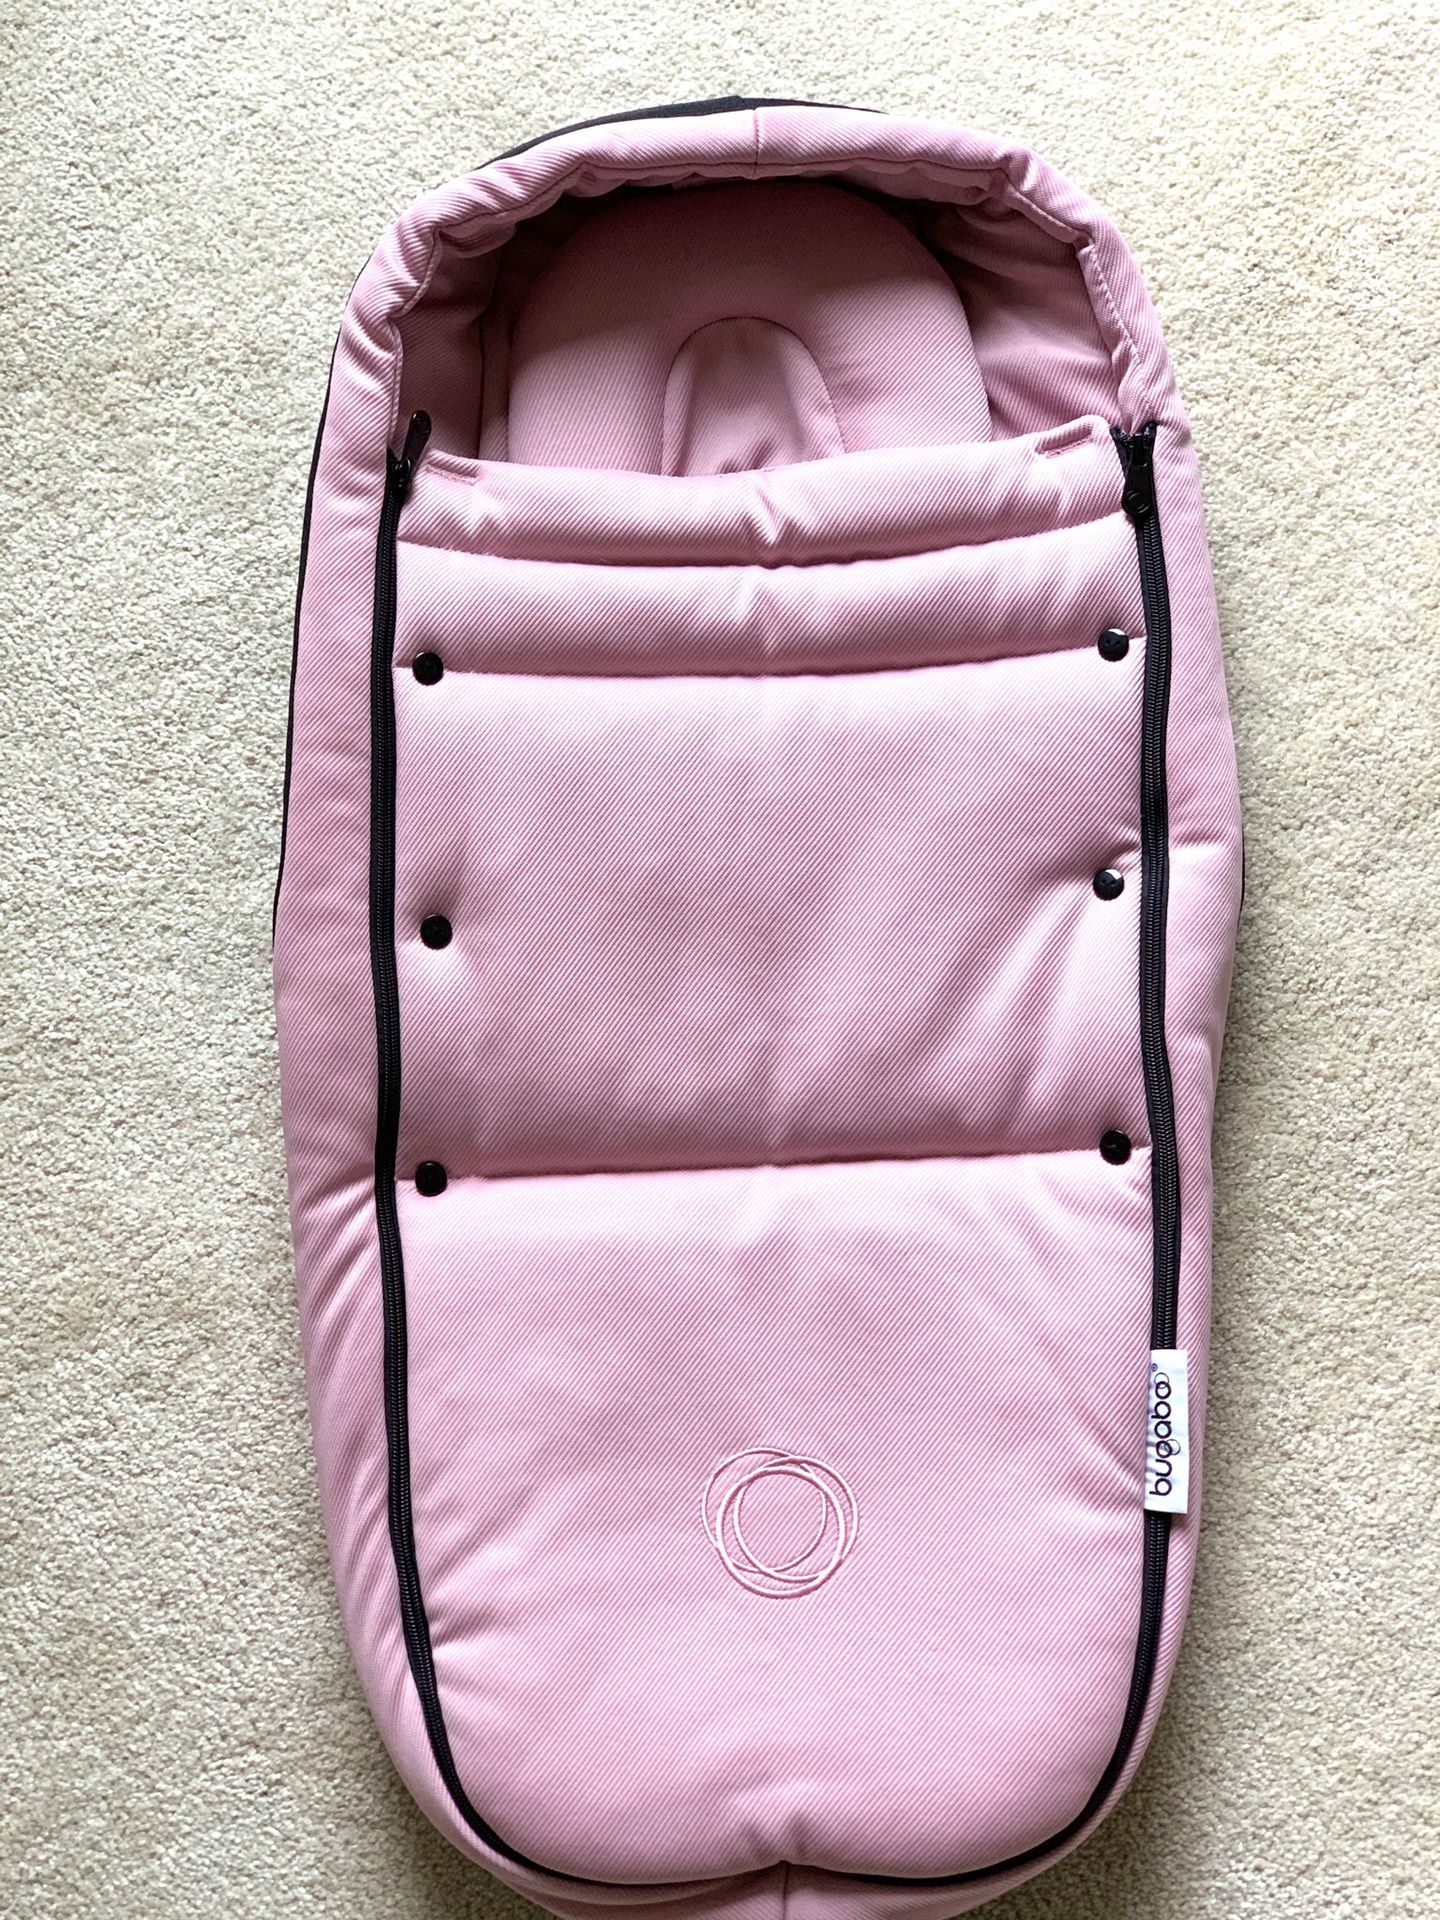 Bugaboo stroller sleeping bag